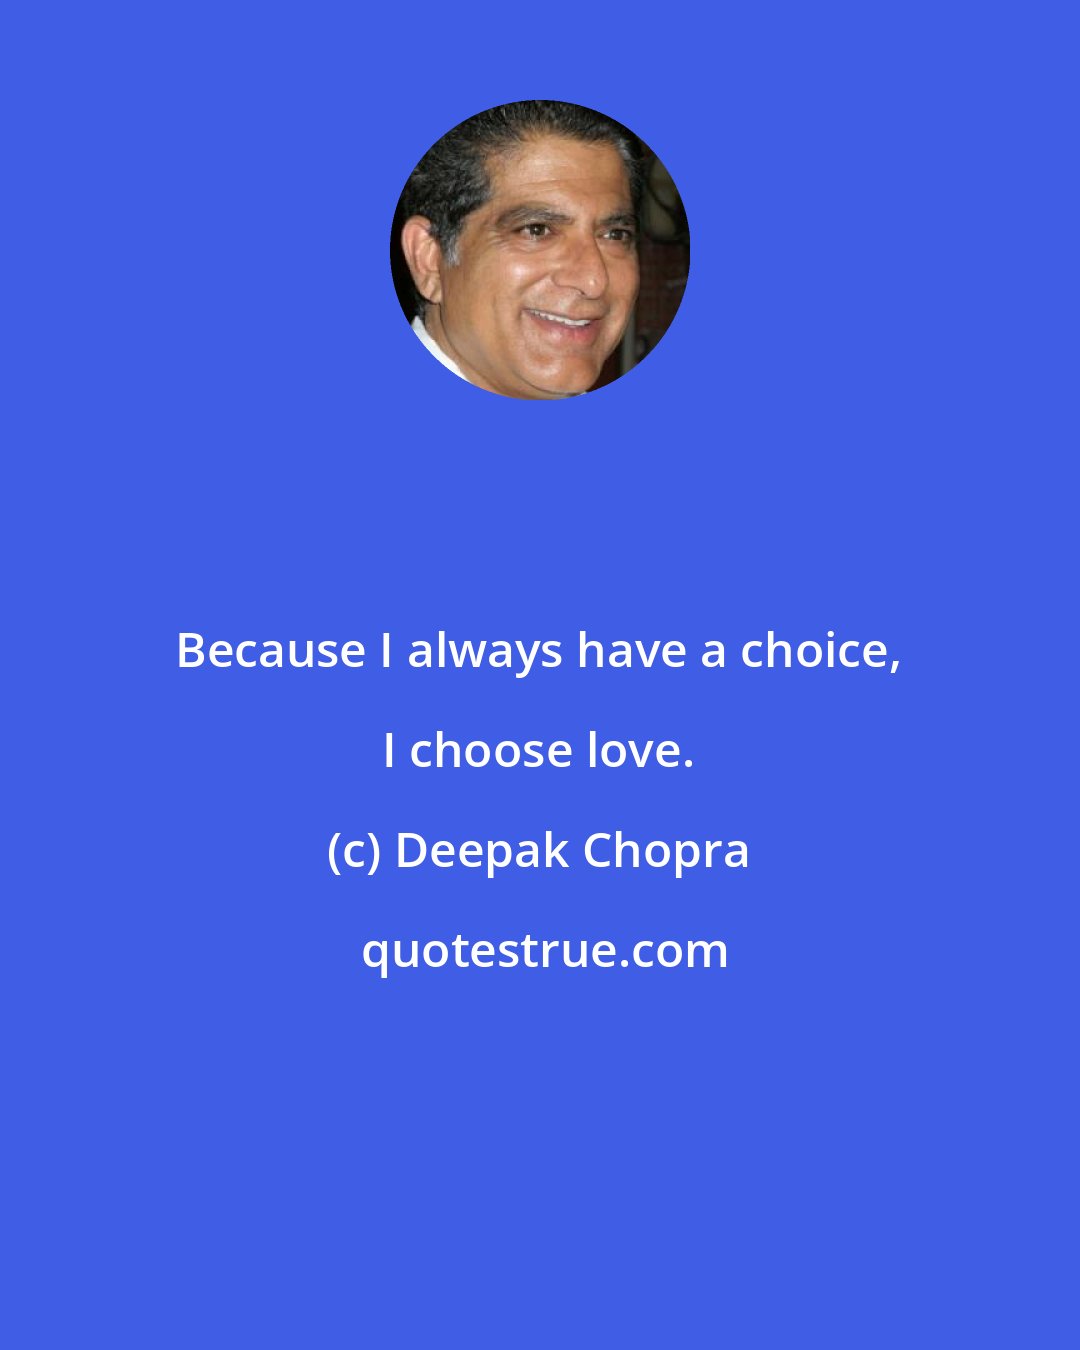 Deepak Chopra: Because I always have a choice, I choose love.